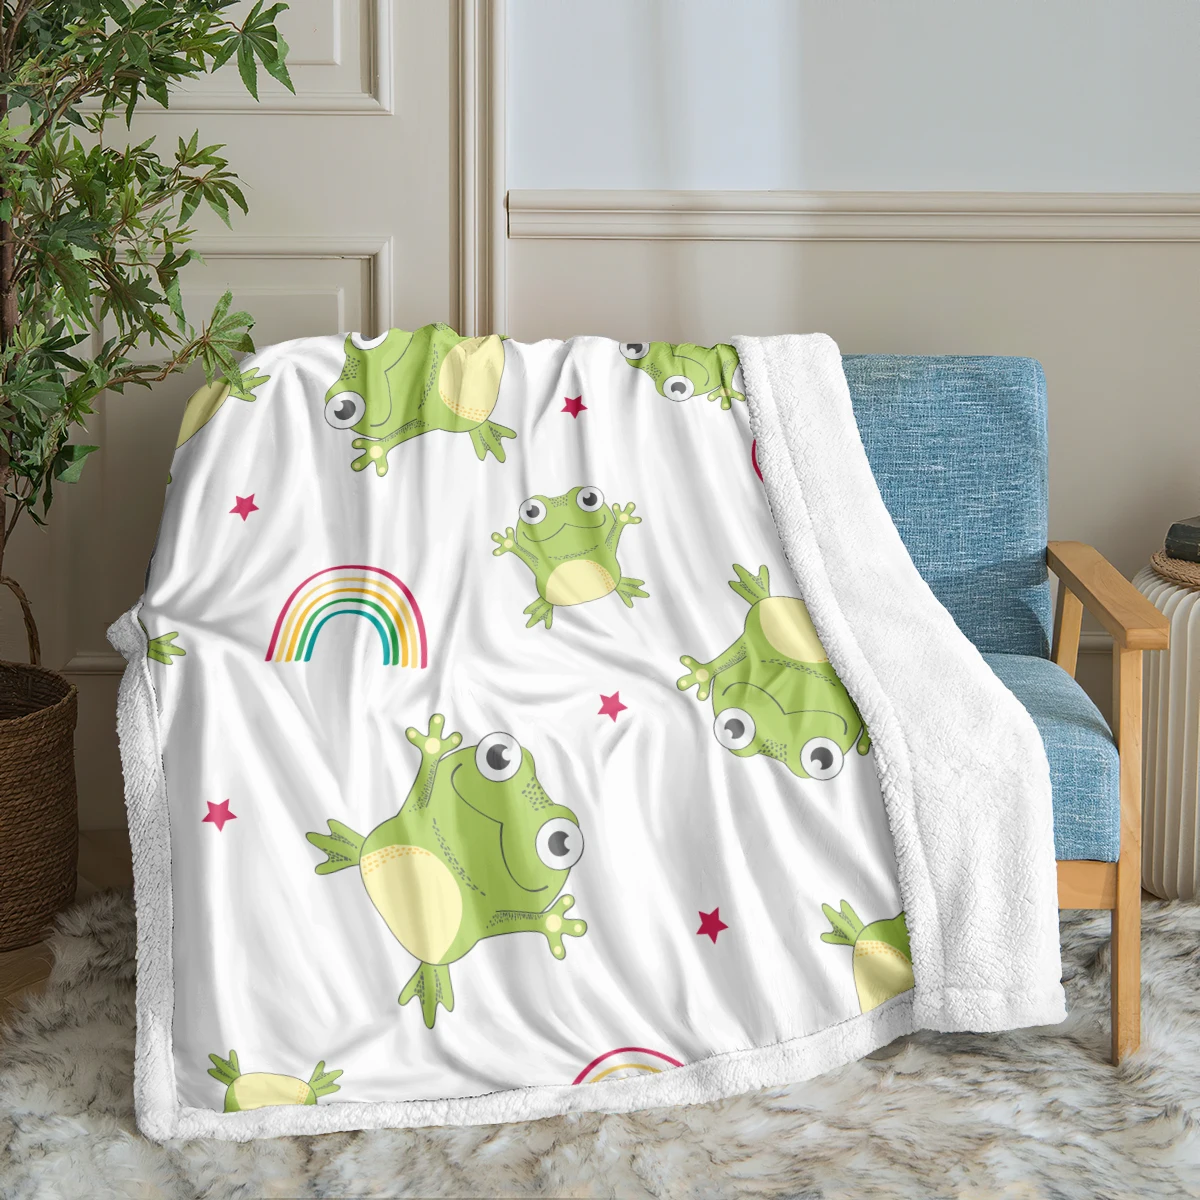 

Frog Throw Blanket Cartoon Animal Sherpa Blanket Cute Blanket Soft Black European Style Blanket for Sofa Office